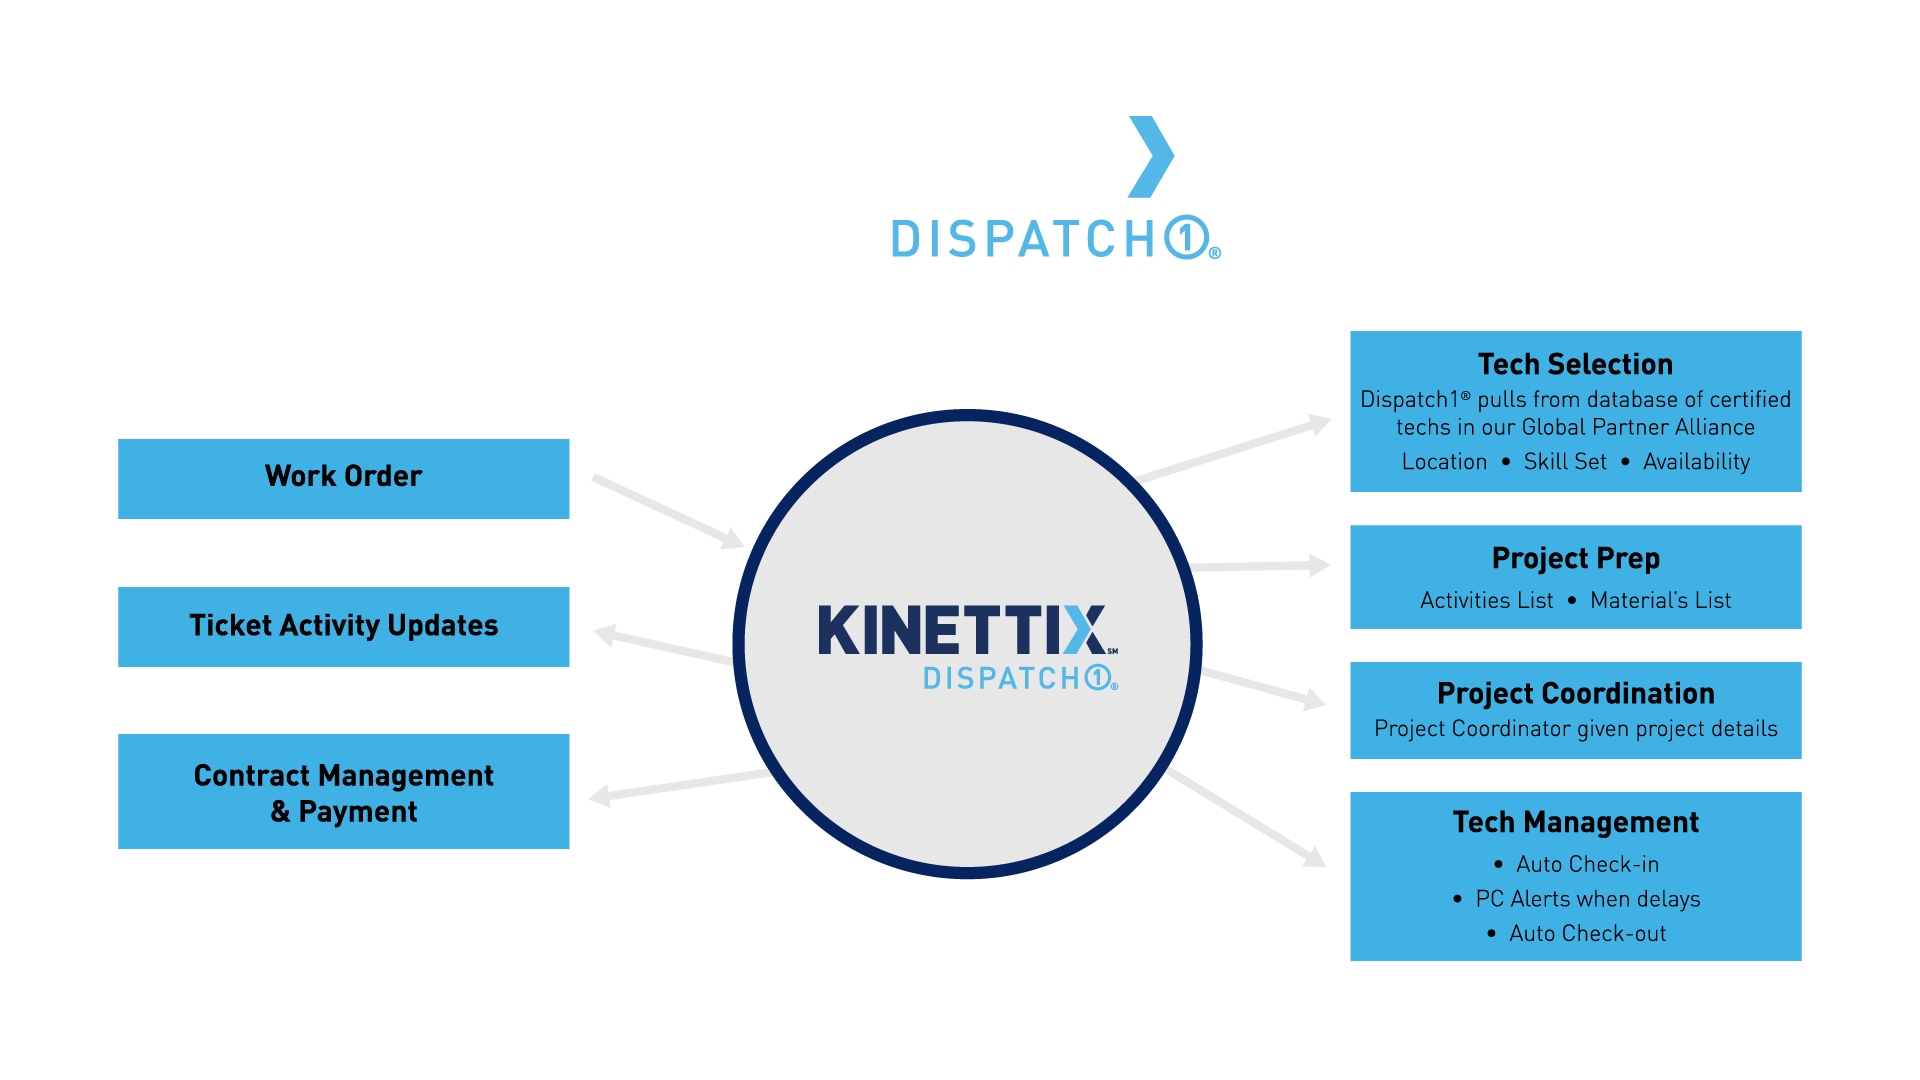 KNTX_Dispatch1-Client-Mngt-Platform-vs-KNTX-tech-Darkx1200